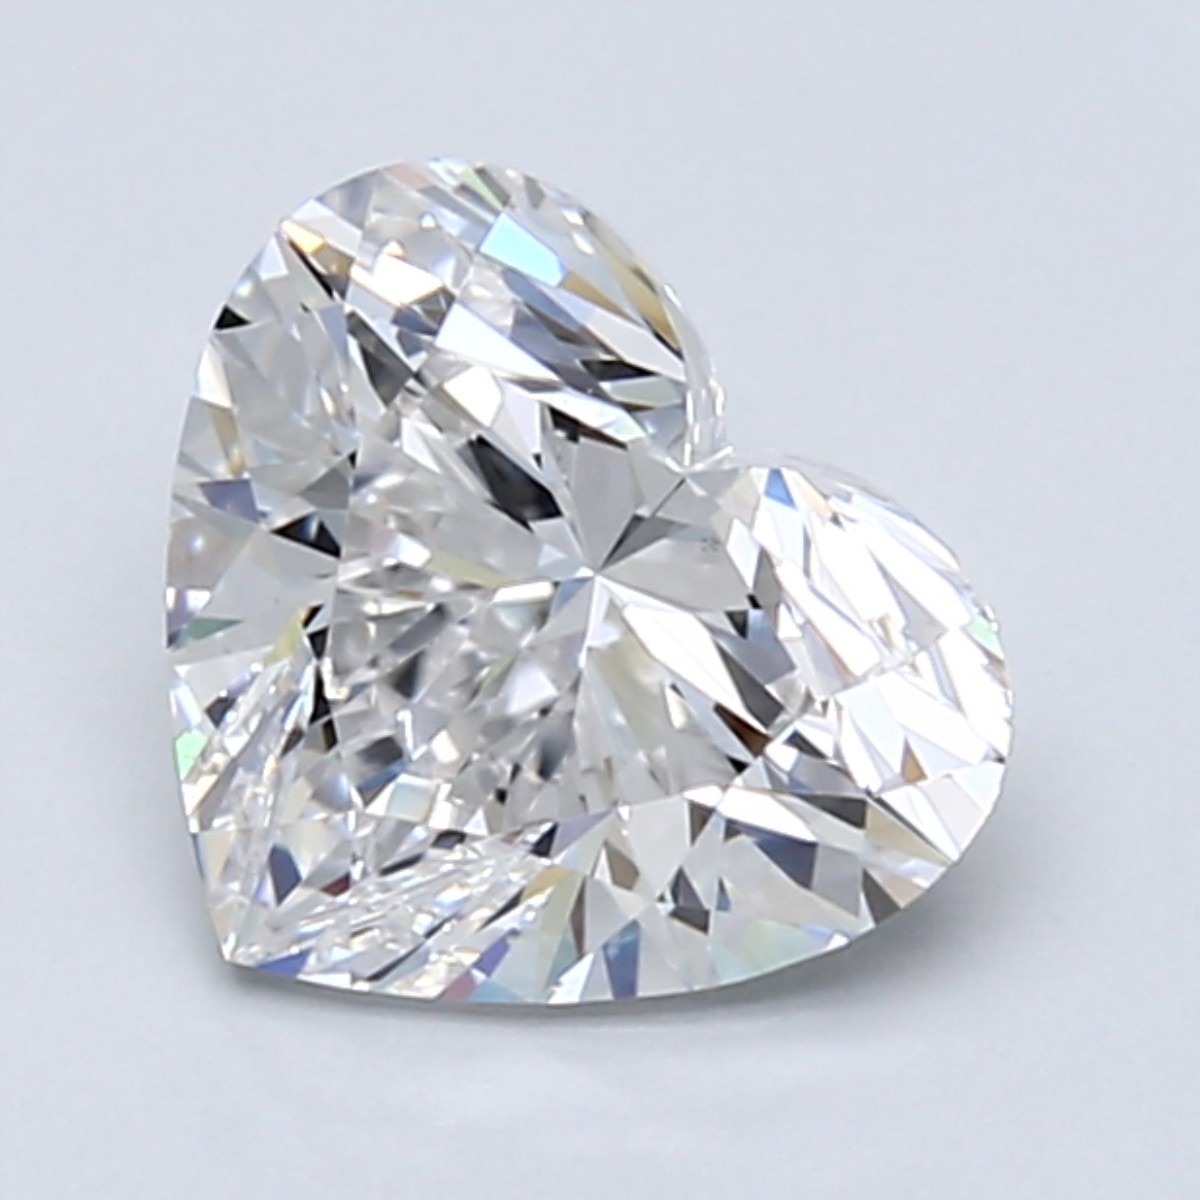 The Heart Shaped Diamond Guide